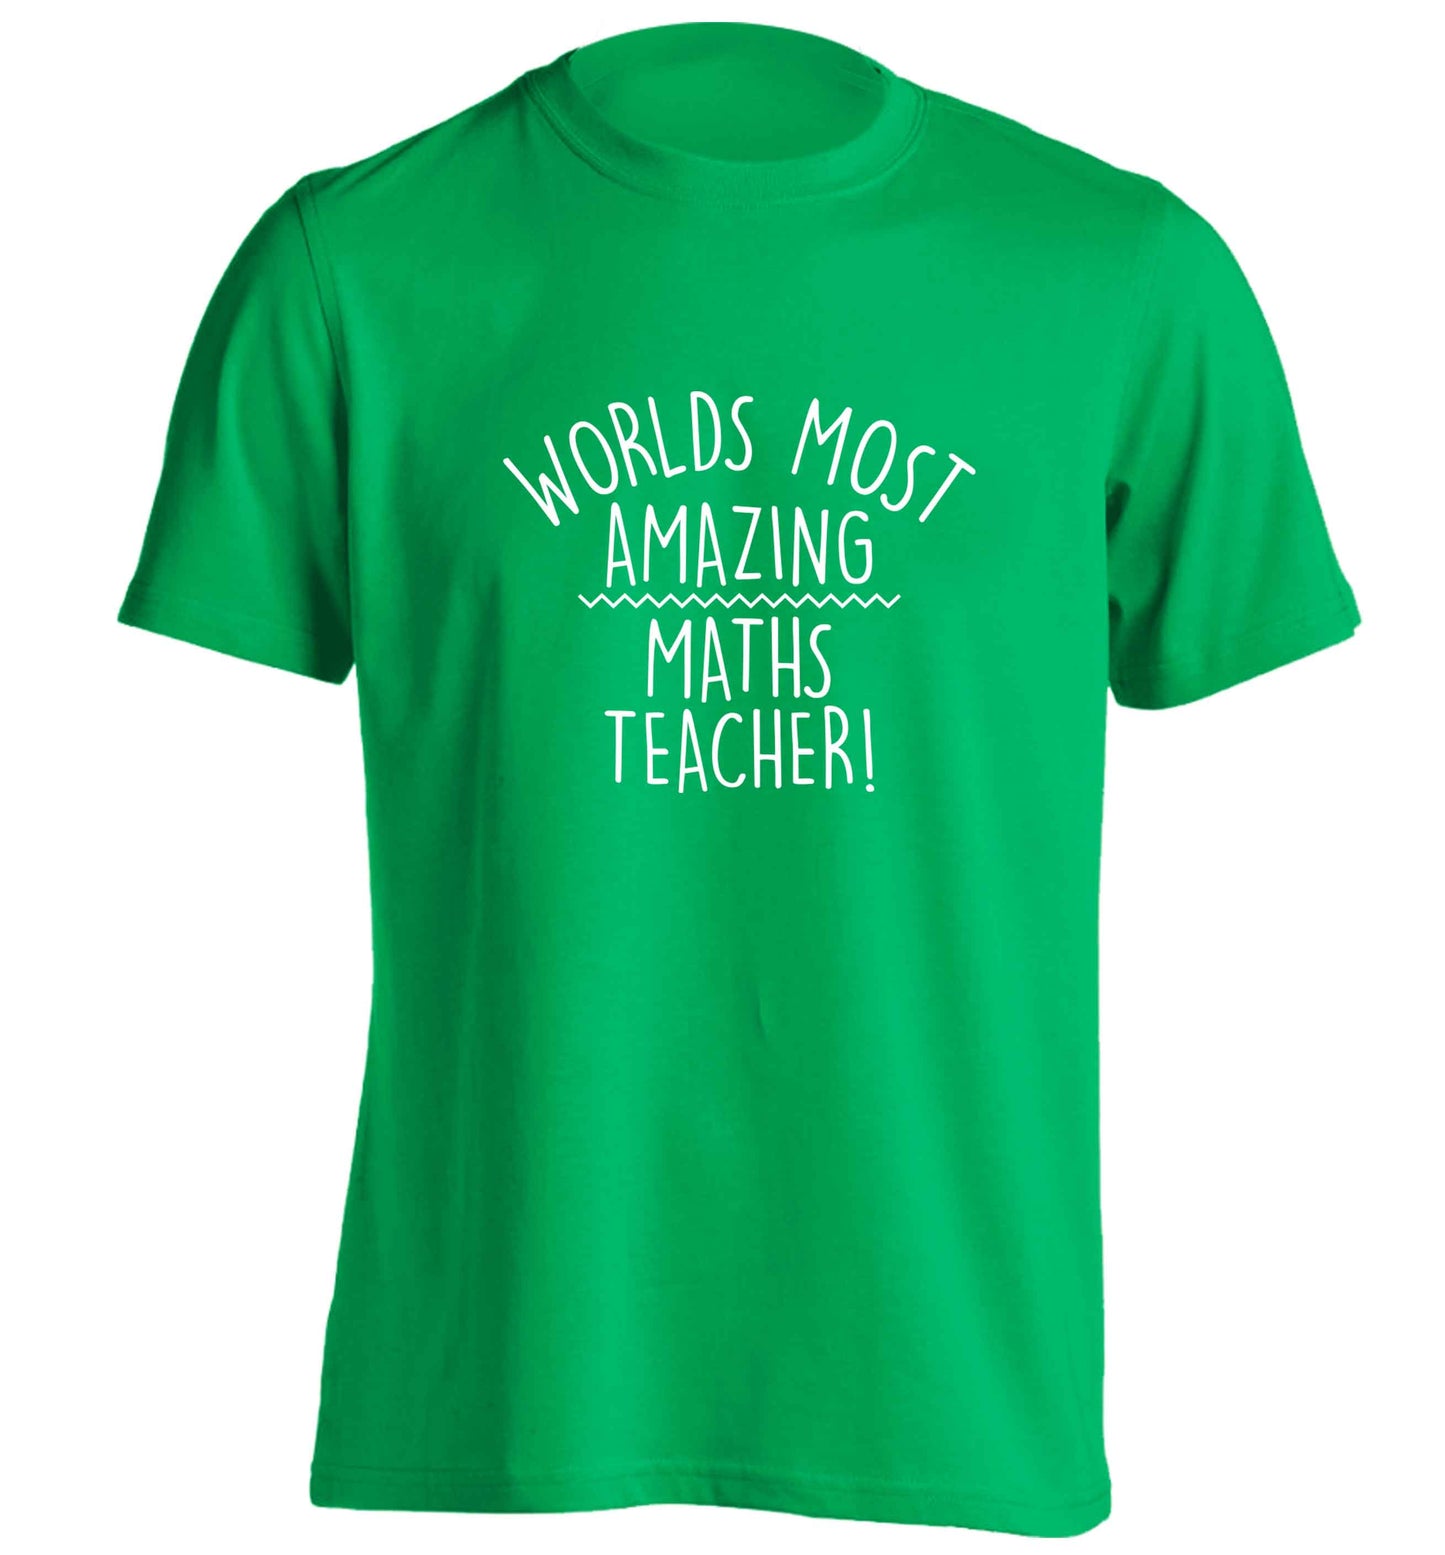 Worlds most amazing maths teacher adults unisex green Tshirt 2XL